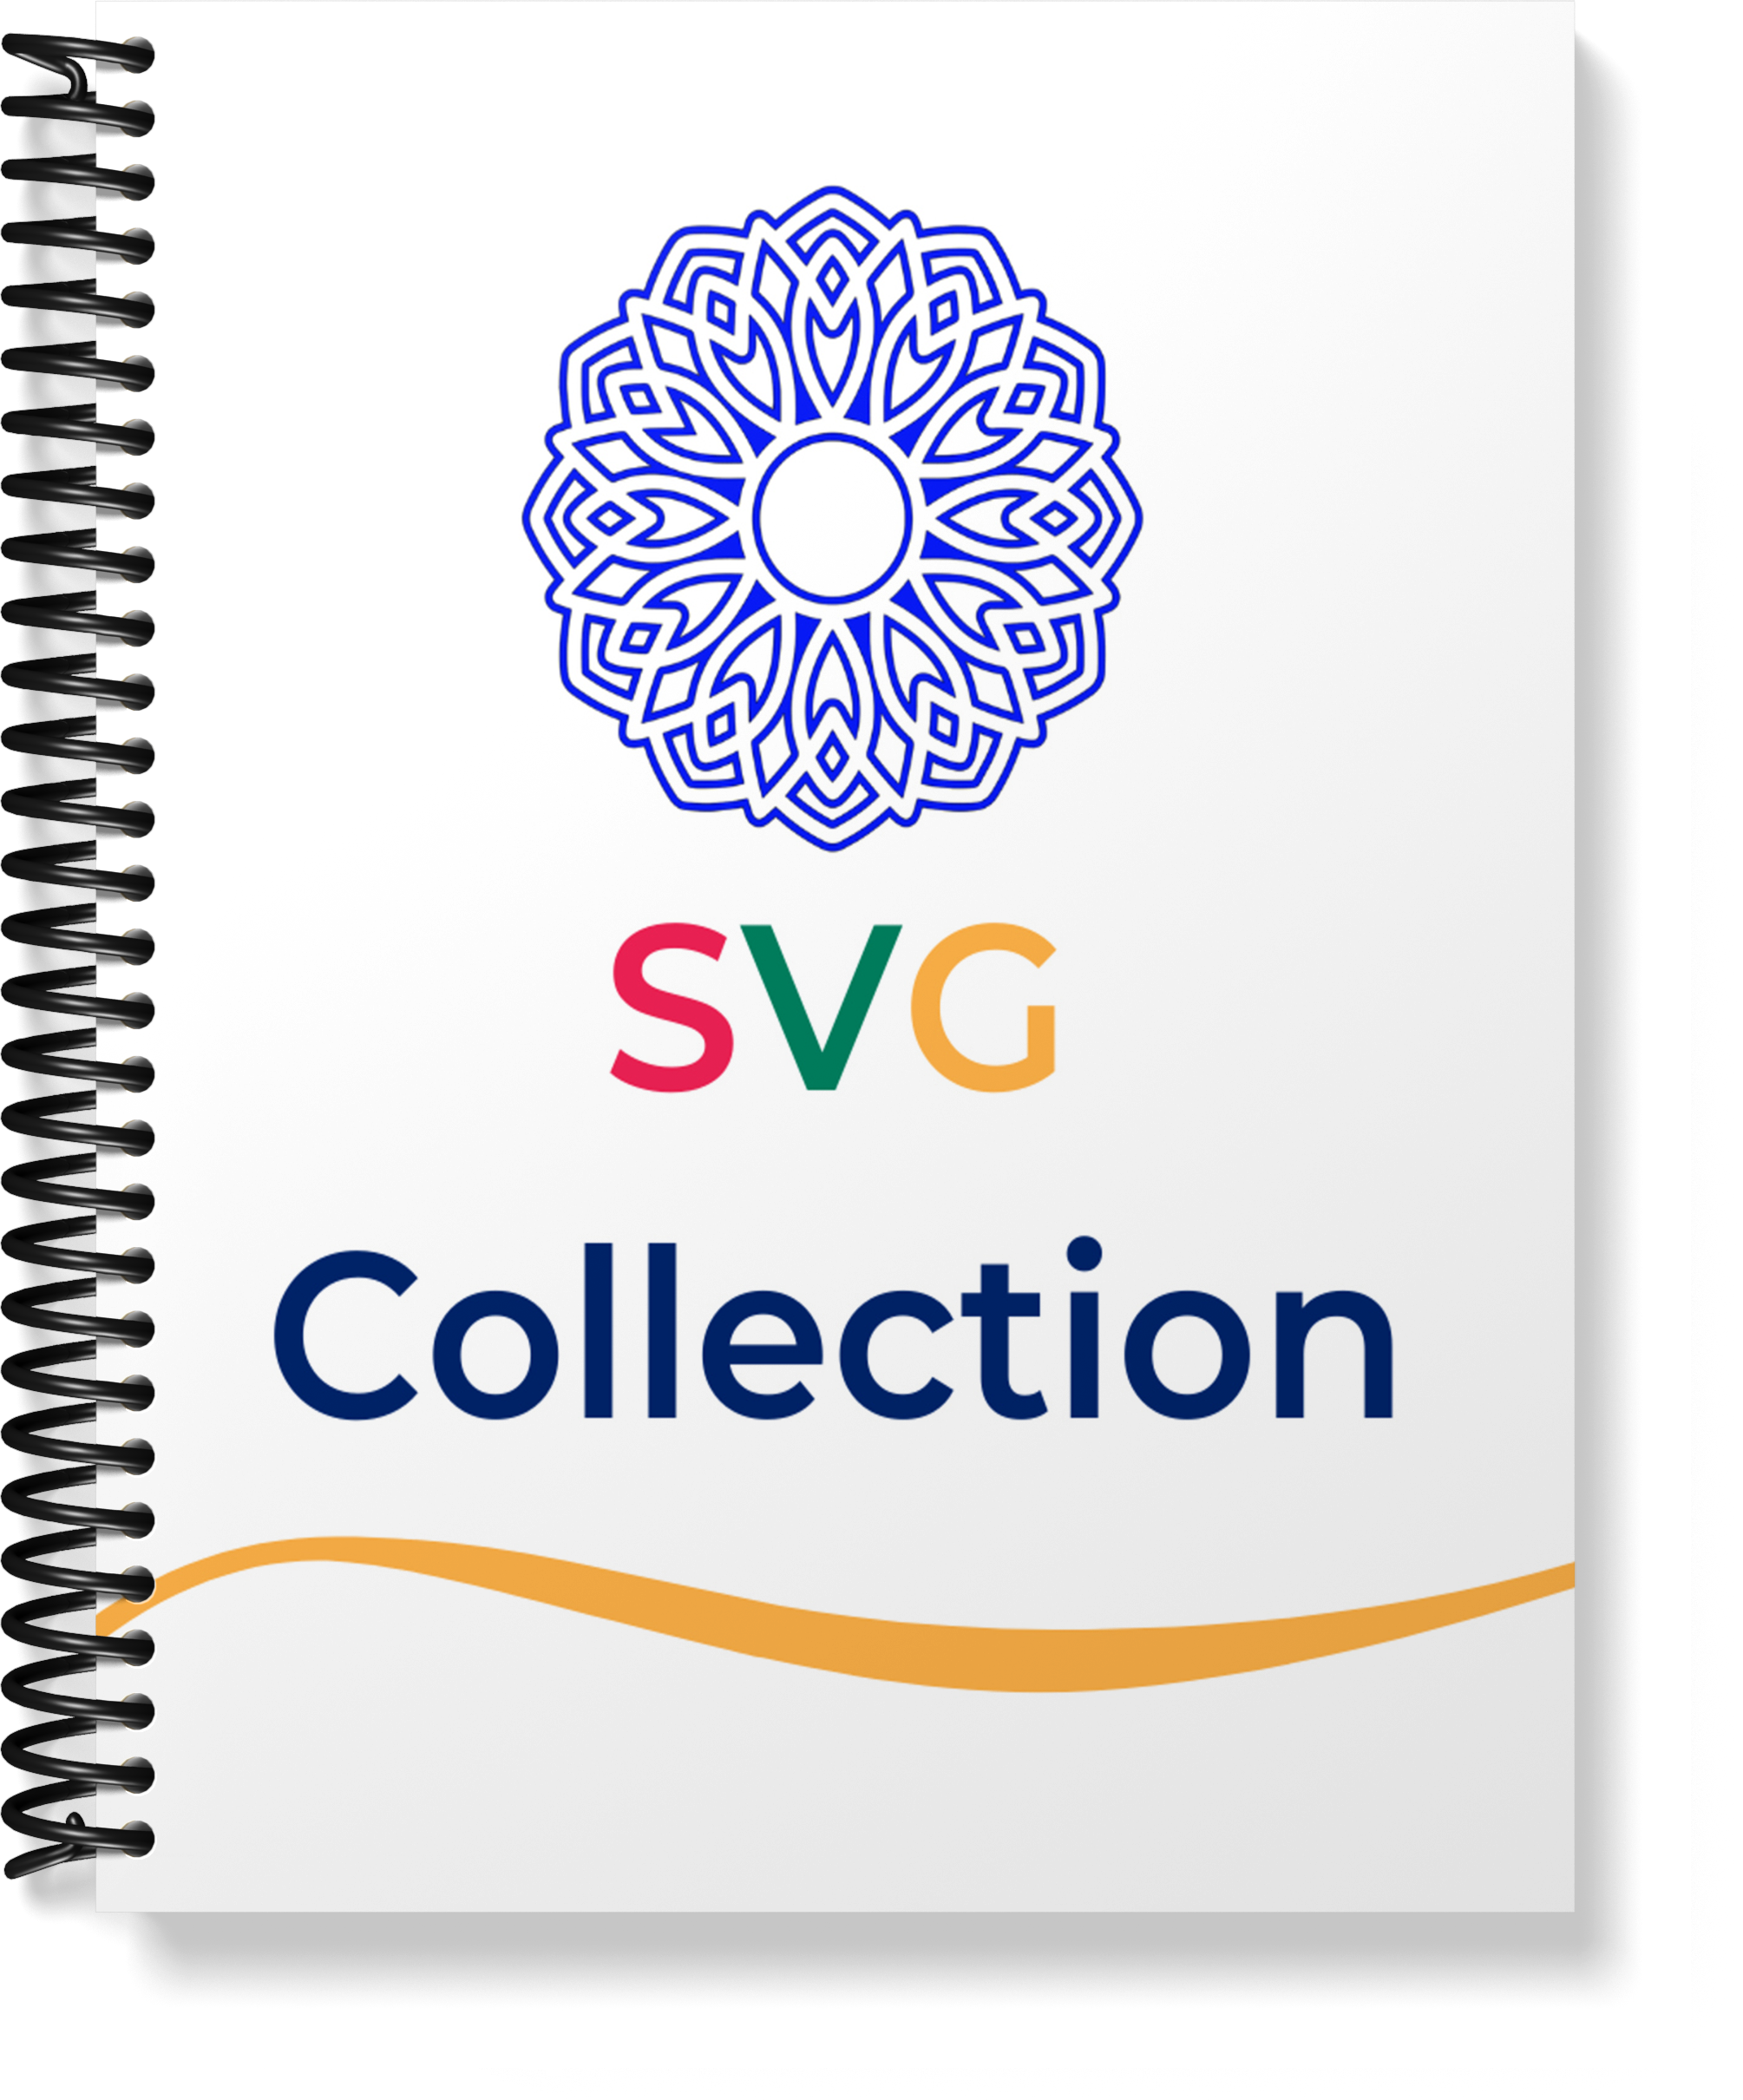 Premium SVG Crafting Collection